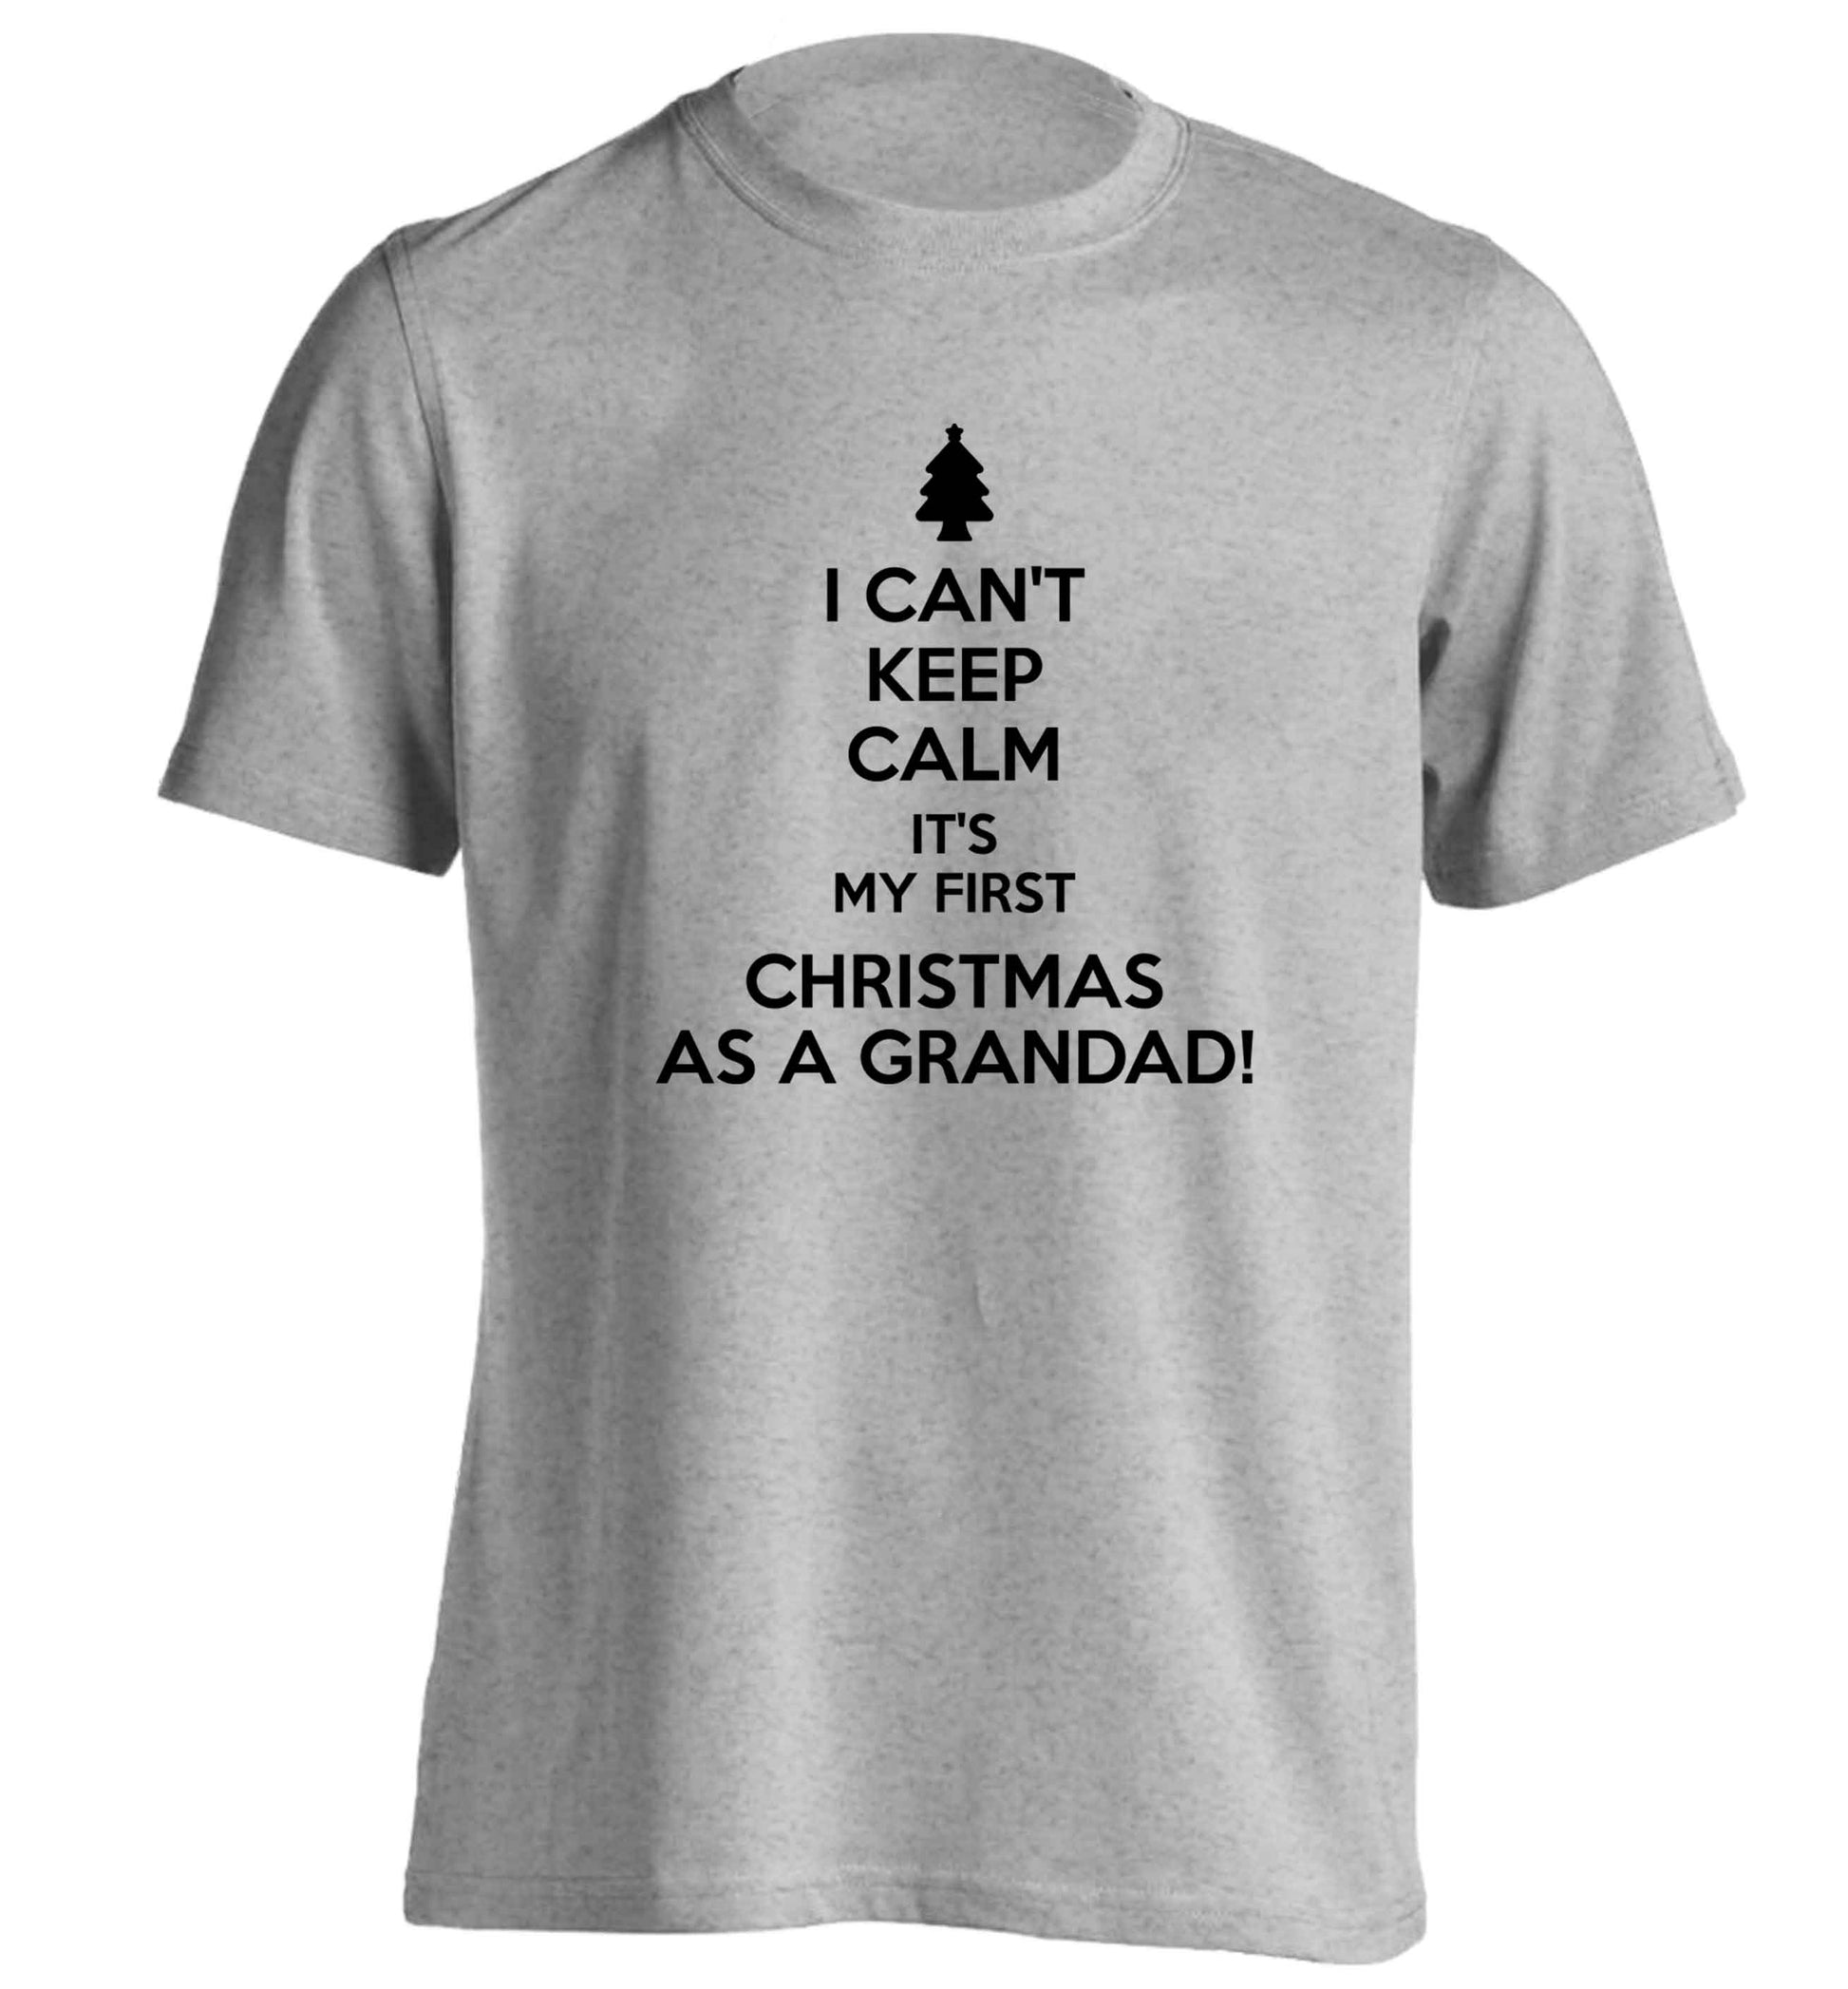 I can't keep calm it's my first Christmas as a grandad! adults unisex grey Tshirt 2XL